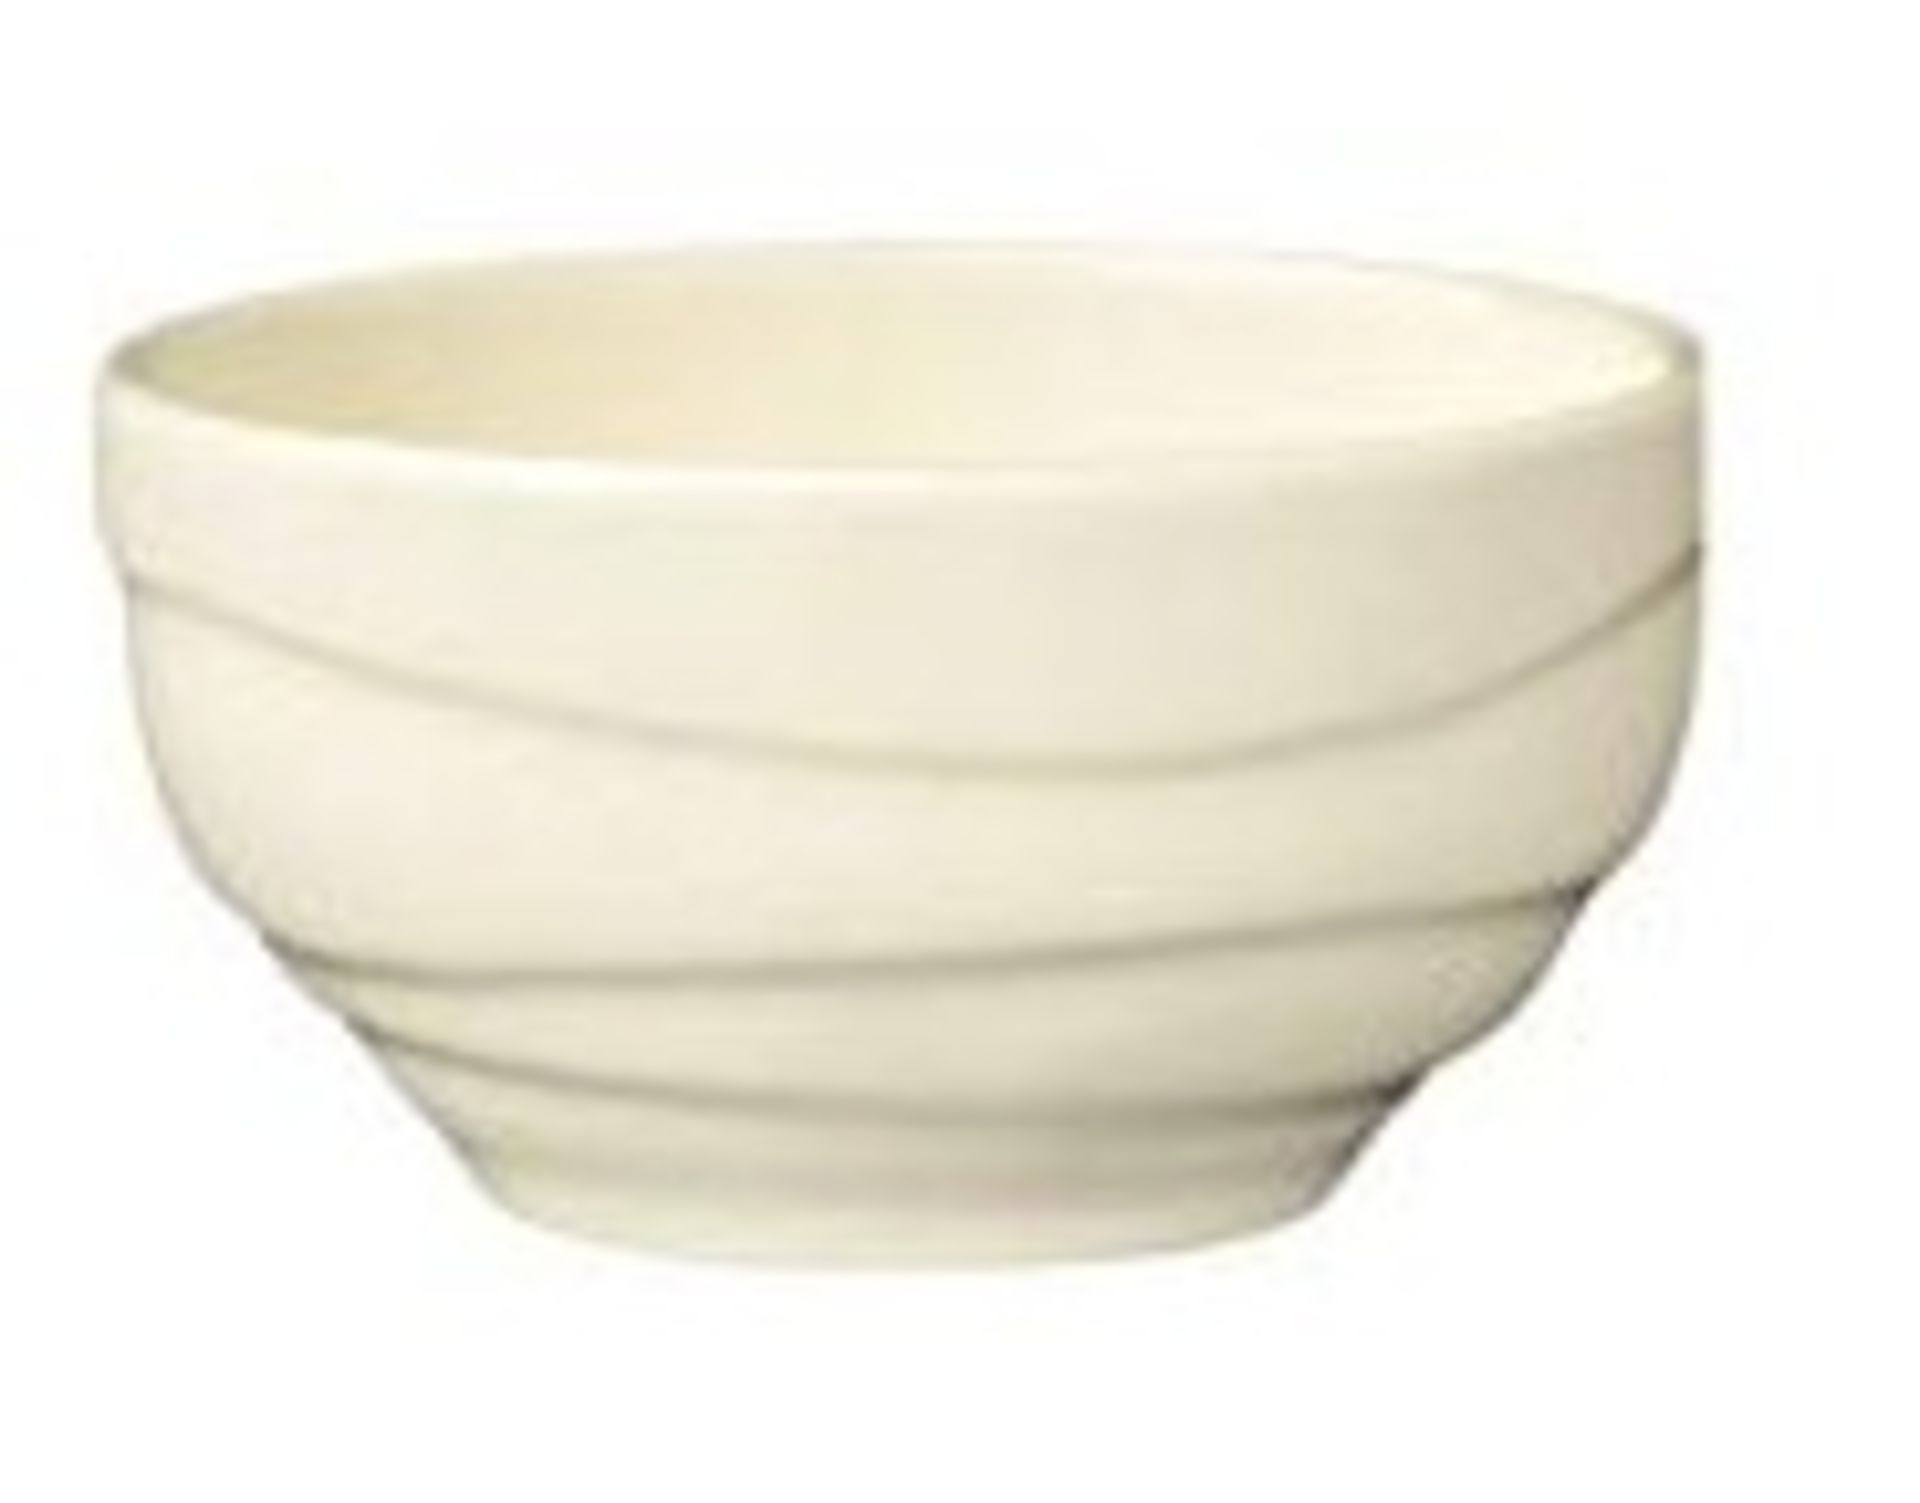 V Brand New Jamie Oliver Waves Bowl 16cm Porcelain